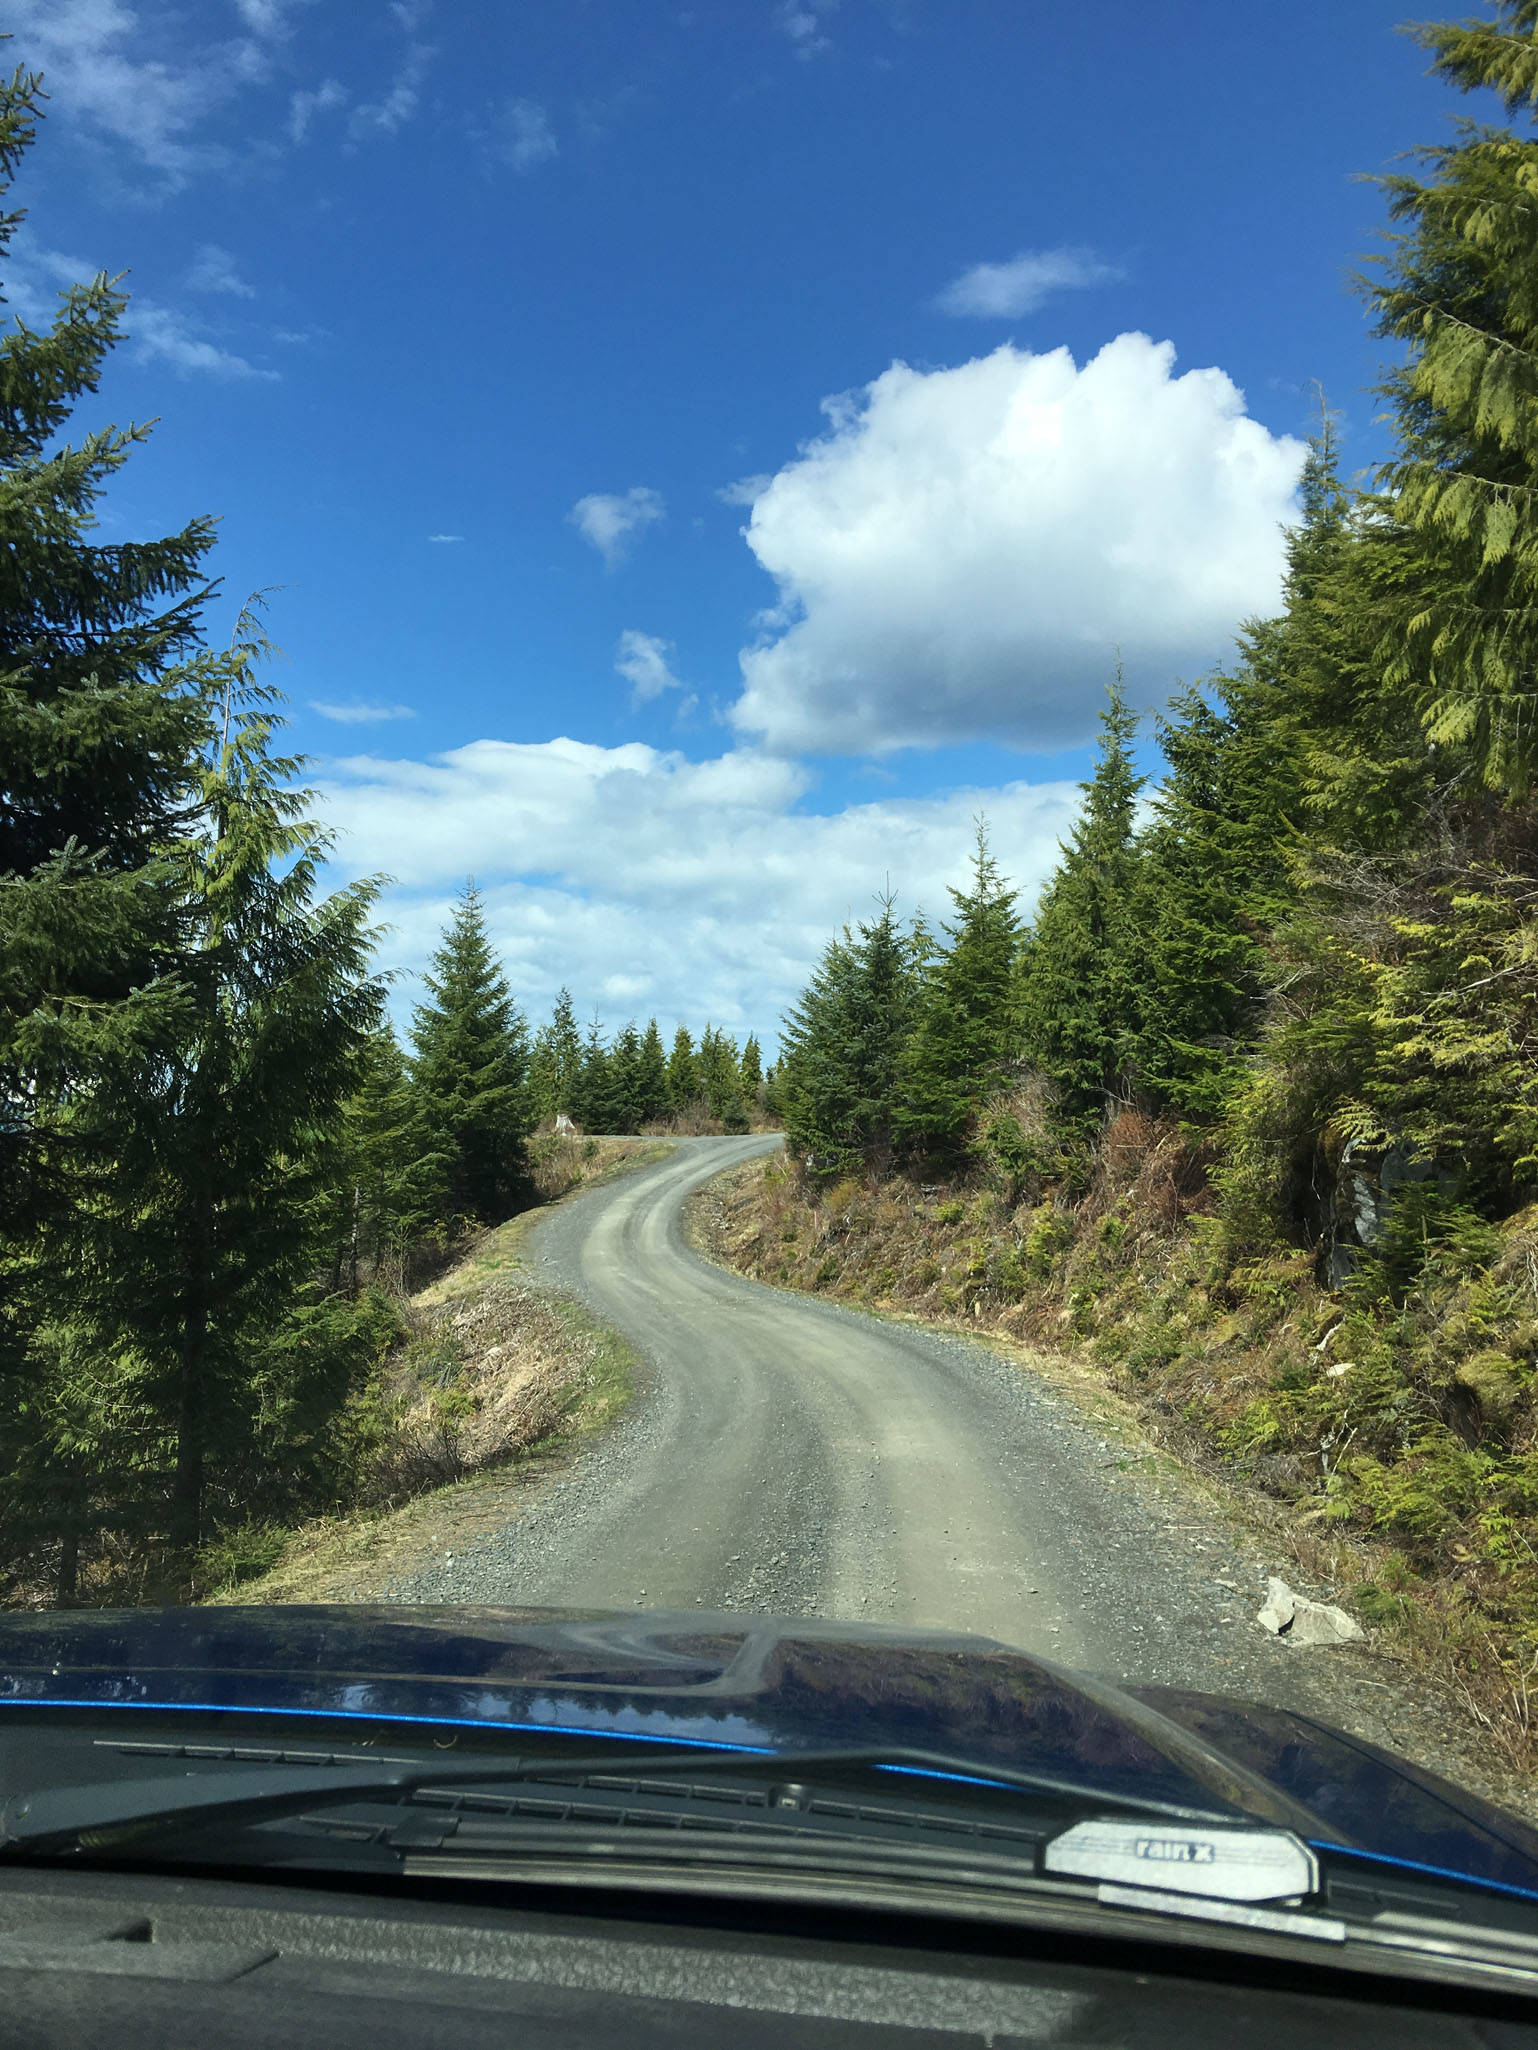 Wrangell logging road. Image courtesy of Vivian Faith Prescott.